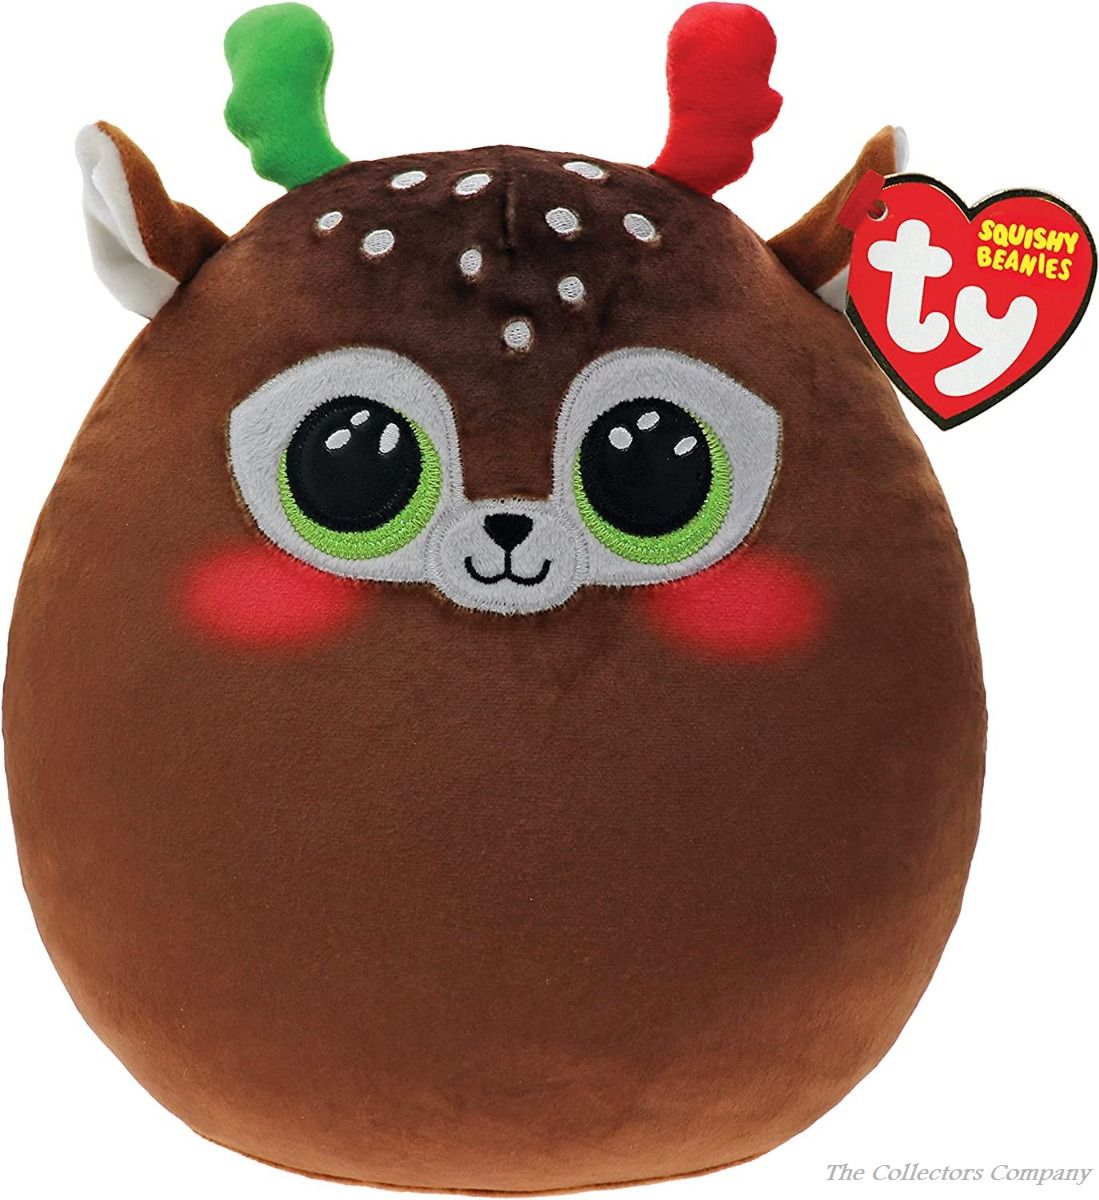 TY Minx Reindeer Christmas Squish a Boo 39245